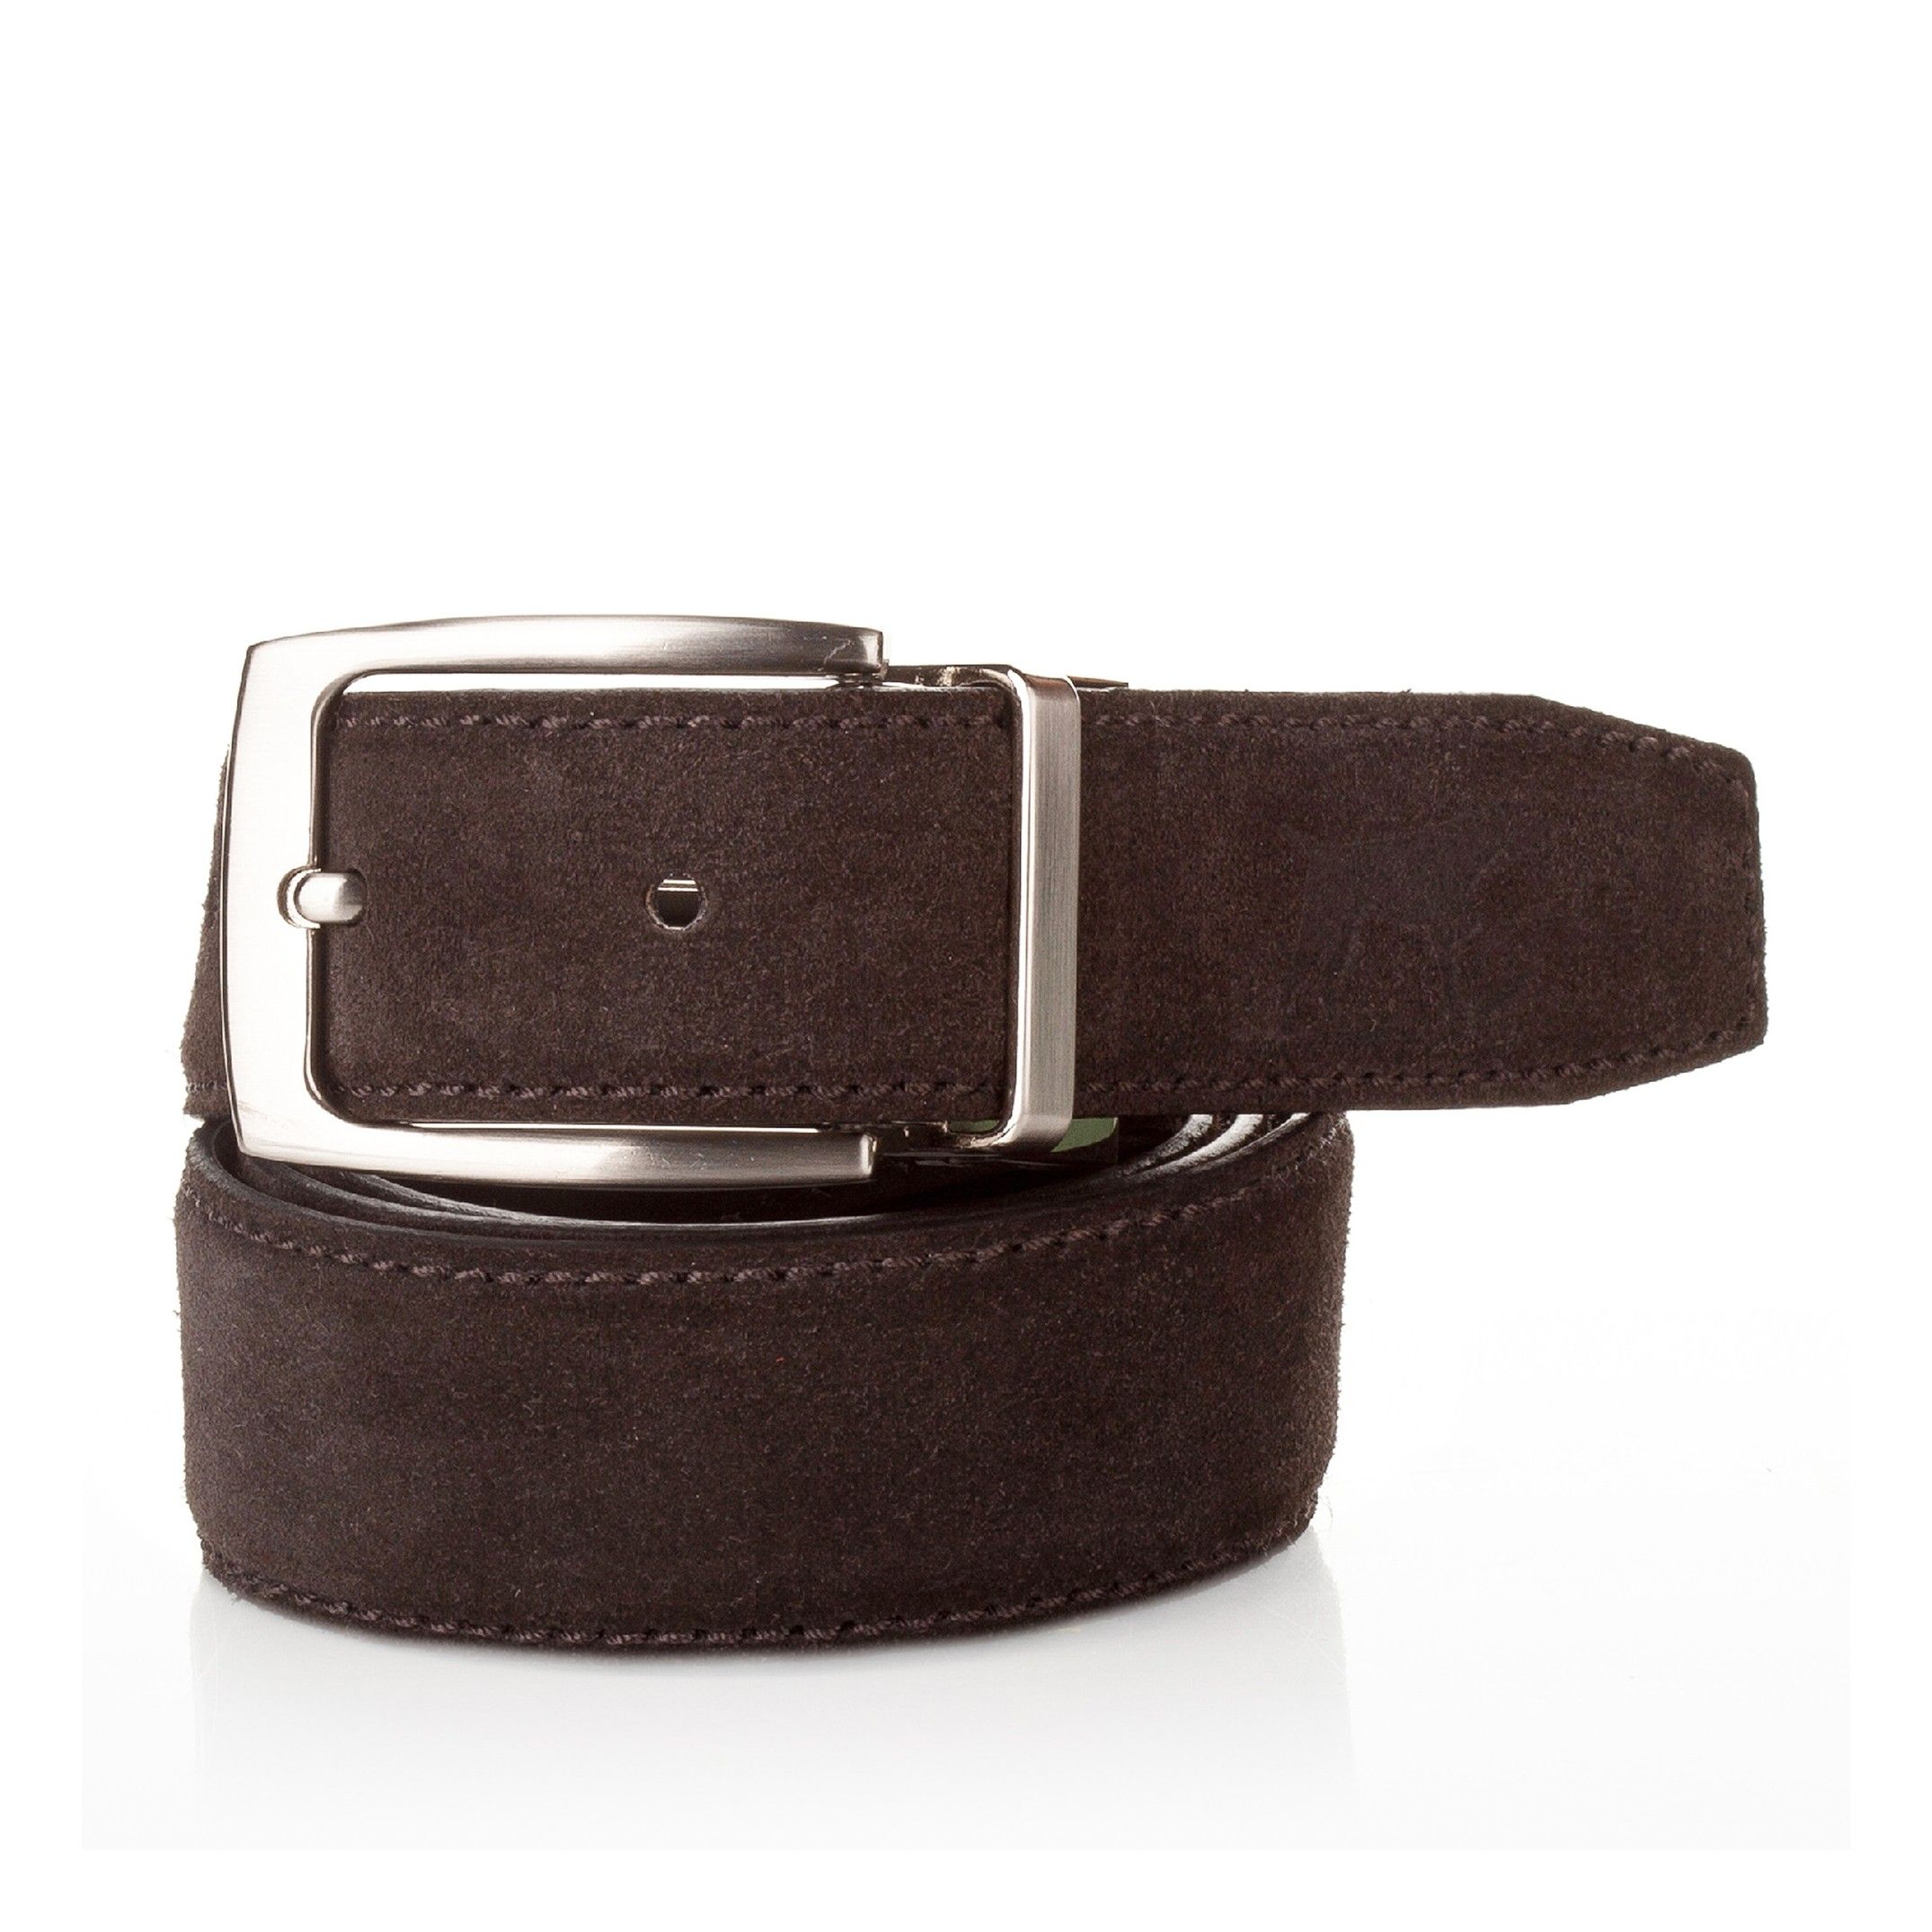 Adjustable belt. Split leather. Removable metal buckle to adapt the belt. Width of 3,5 cm. Large of 100 cm & 115 cm. Coffee color.